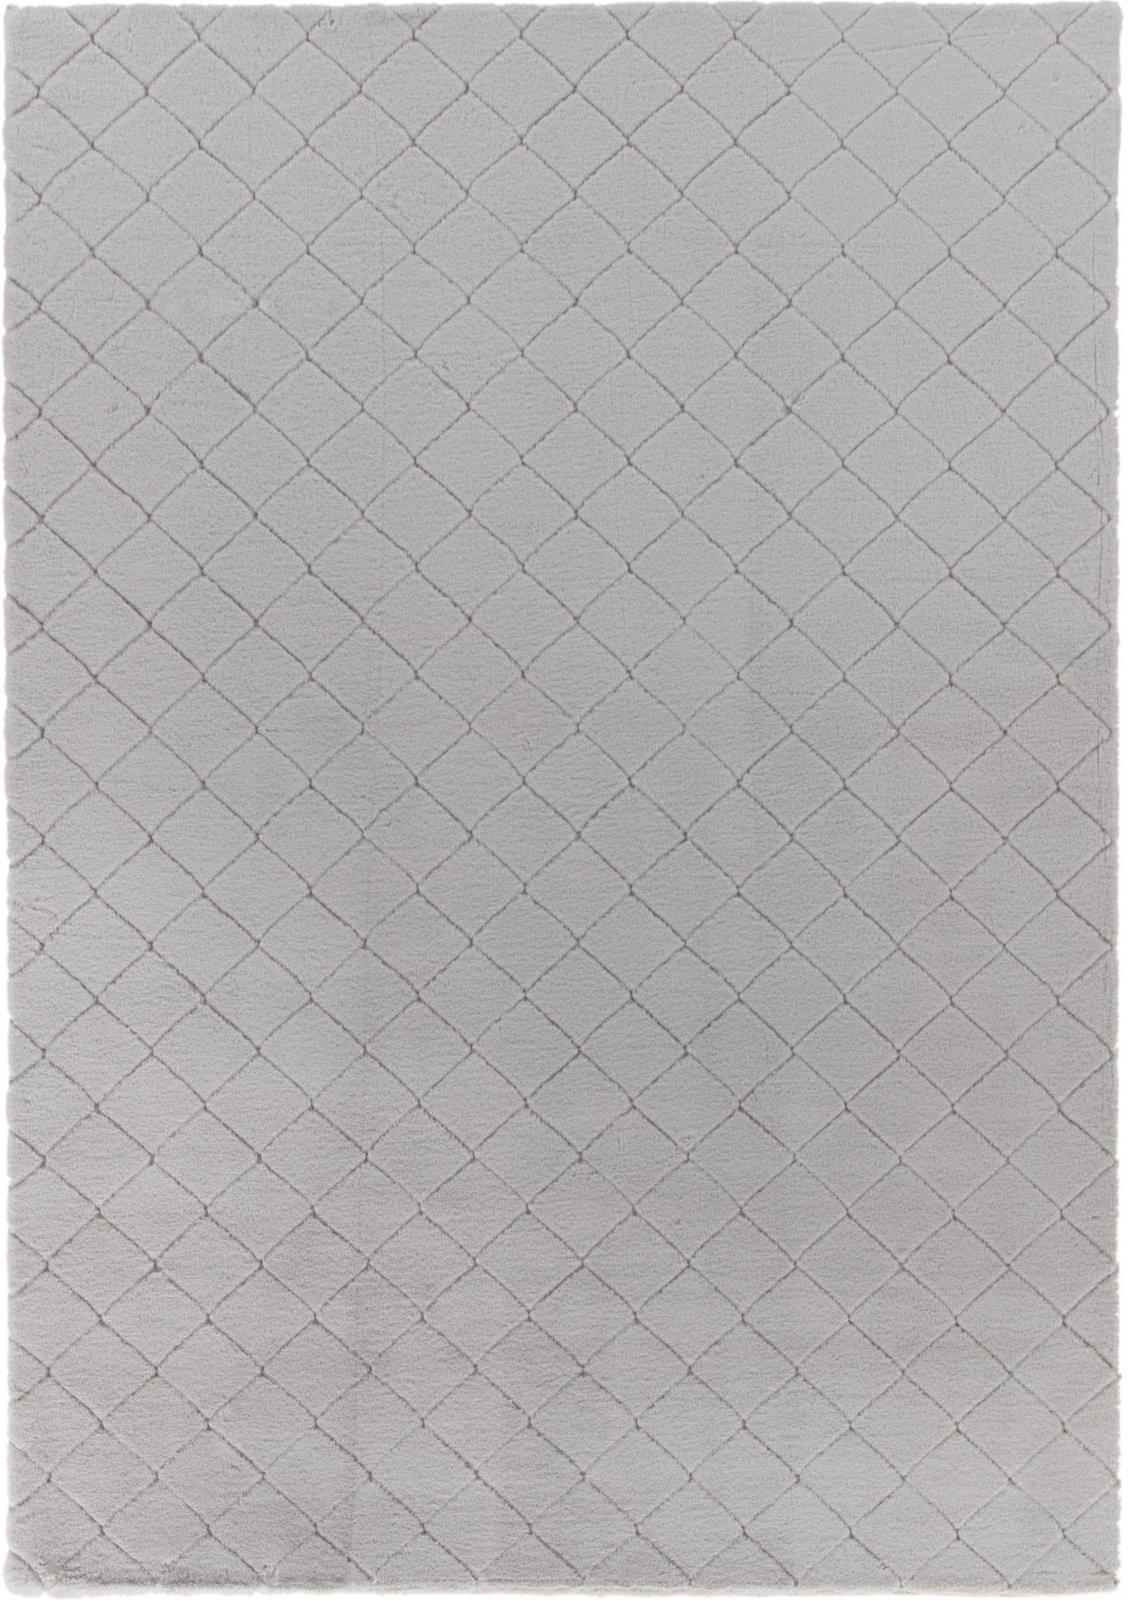 Covor Antiderapant, 160 x 230 cm, Gri, Model Blanita Lop Grofat 076